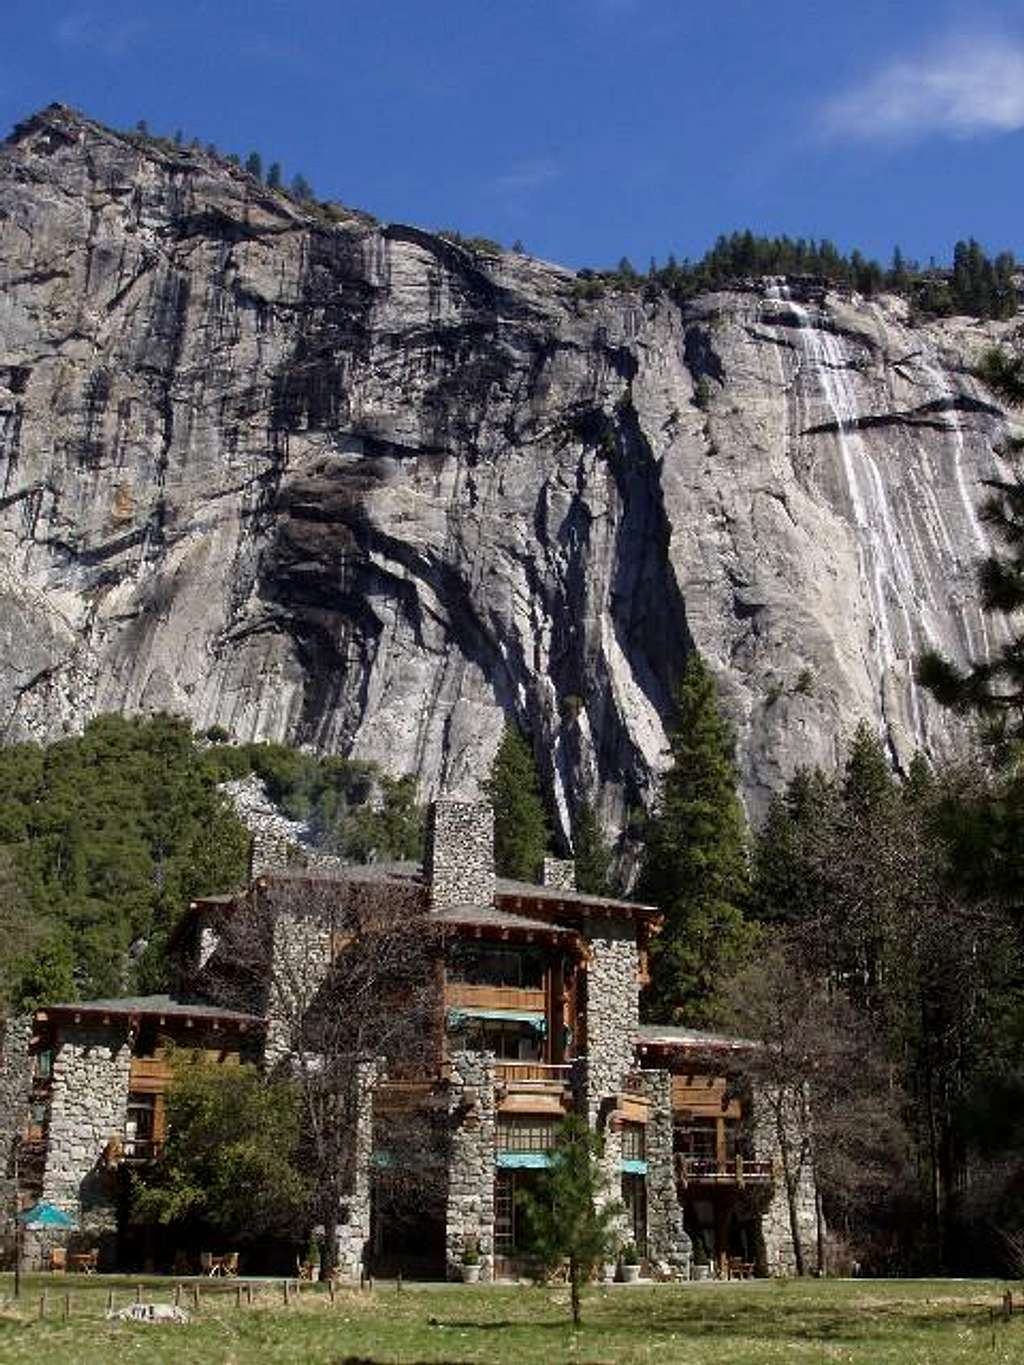 The Awhanee Lodge in Yosemite...